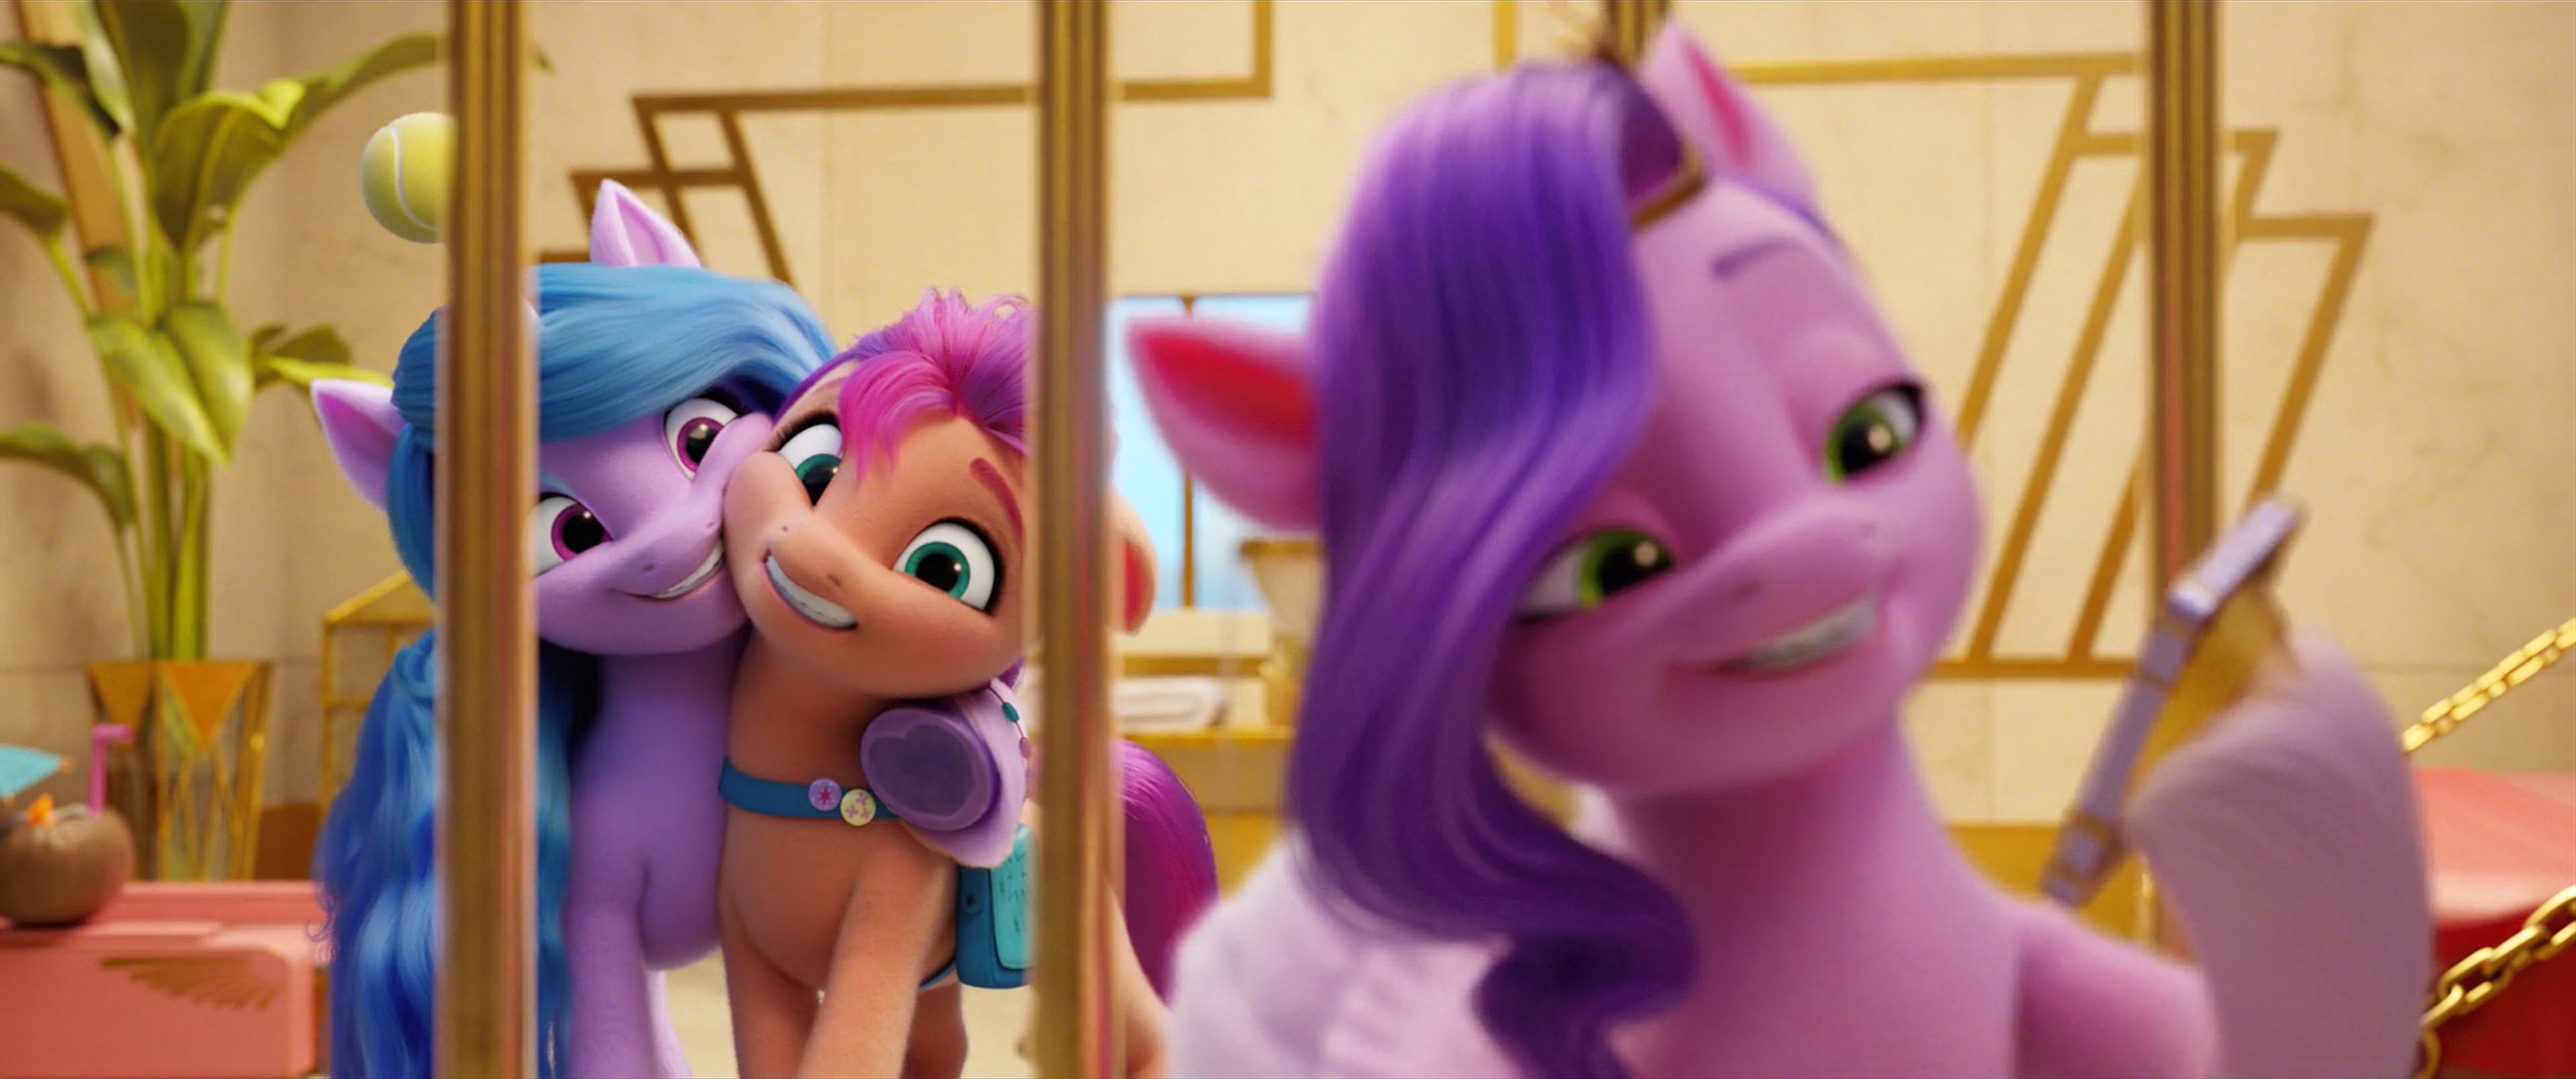 My Little Pony: A New Generation, Screencap, Female, High resolution, 3840x1610 Dual Screen Desktop